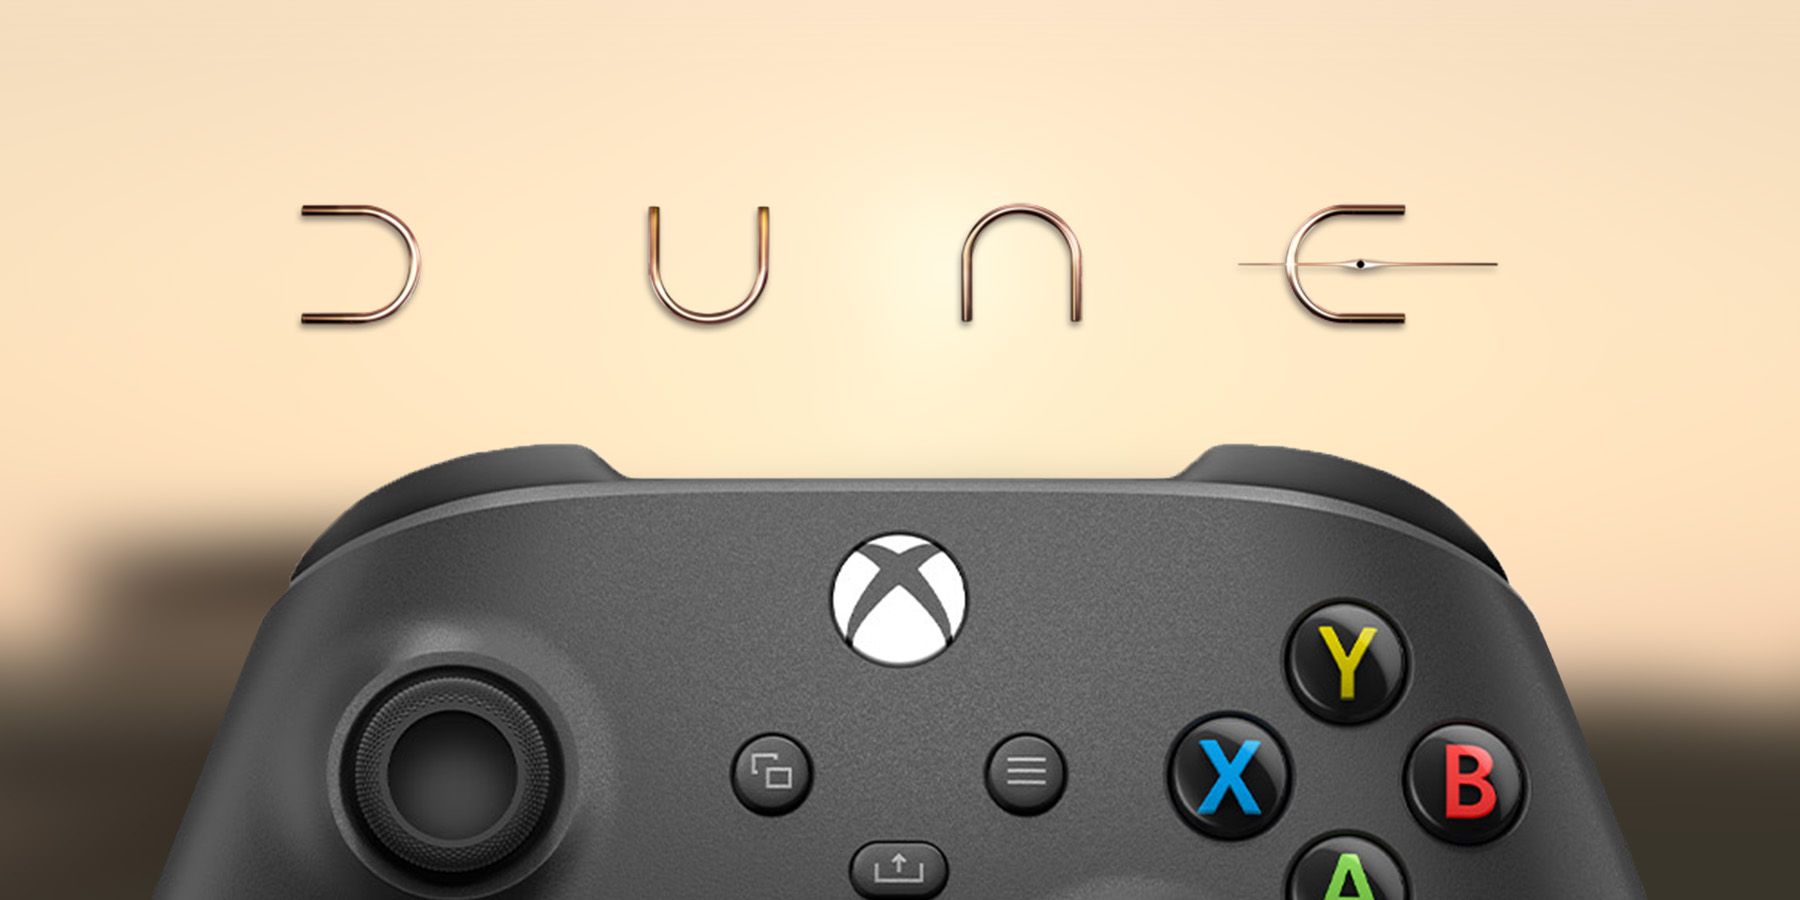 classic Xbox Wireless Controller below Dune movie logo composite